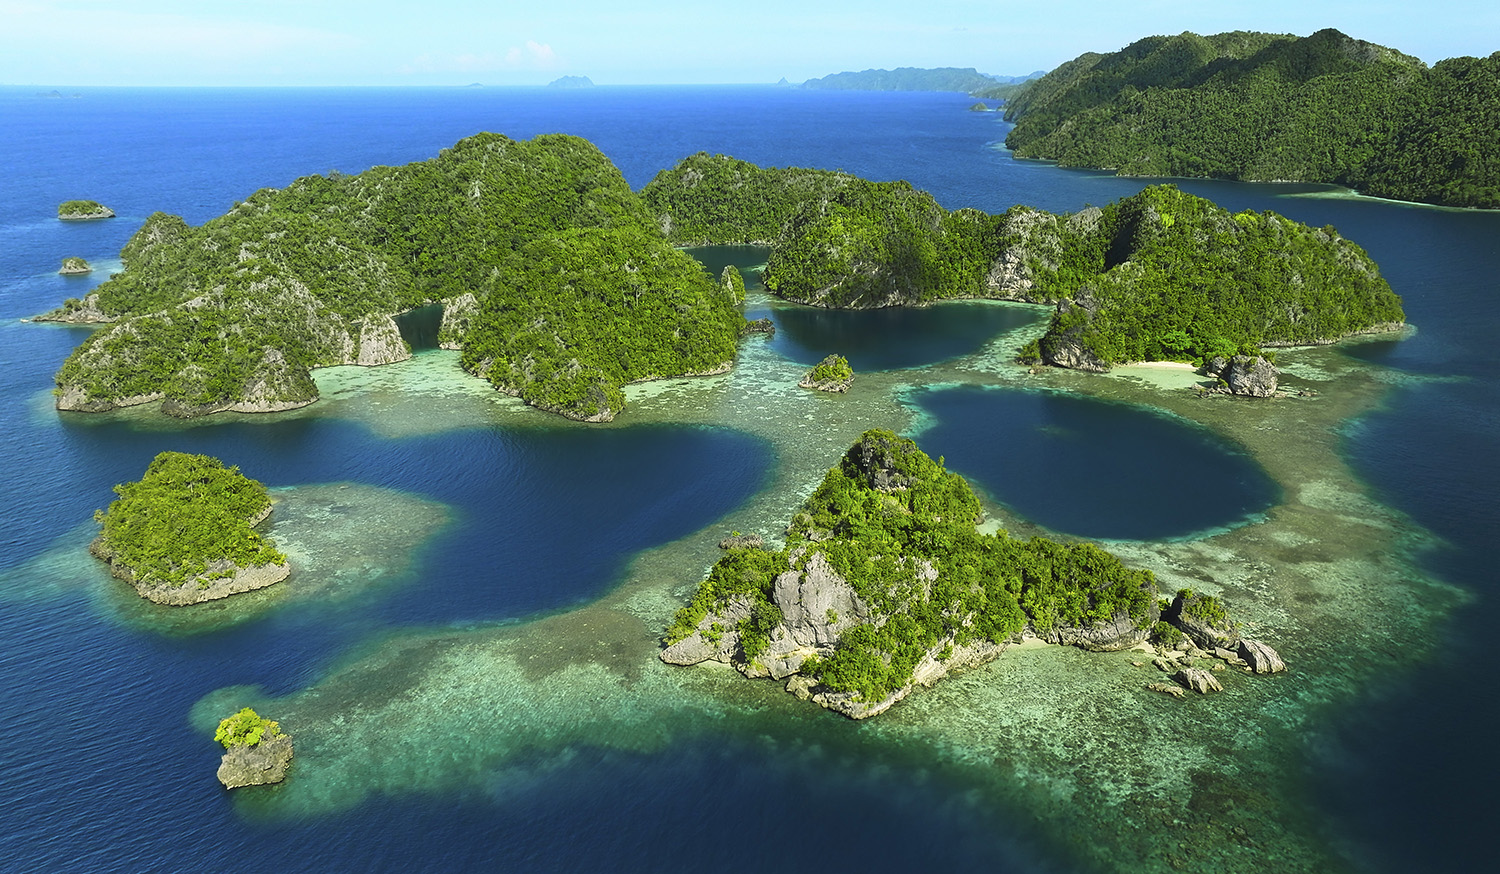 Drone shot of archipelago.